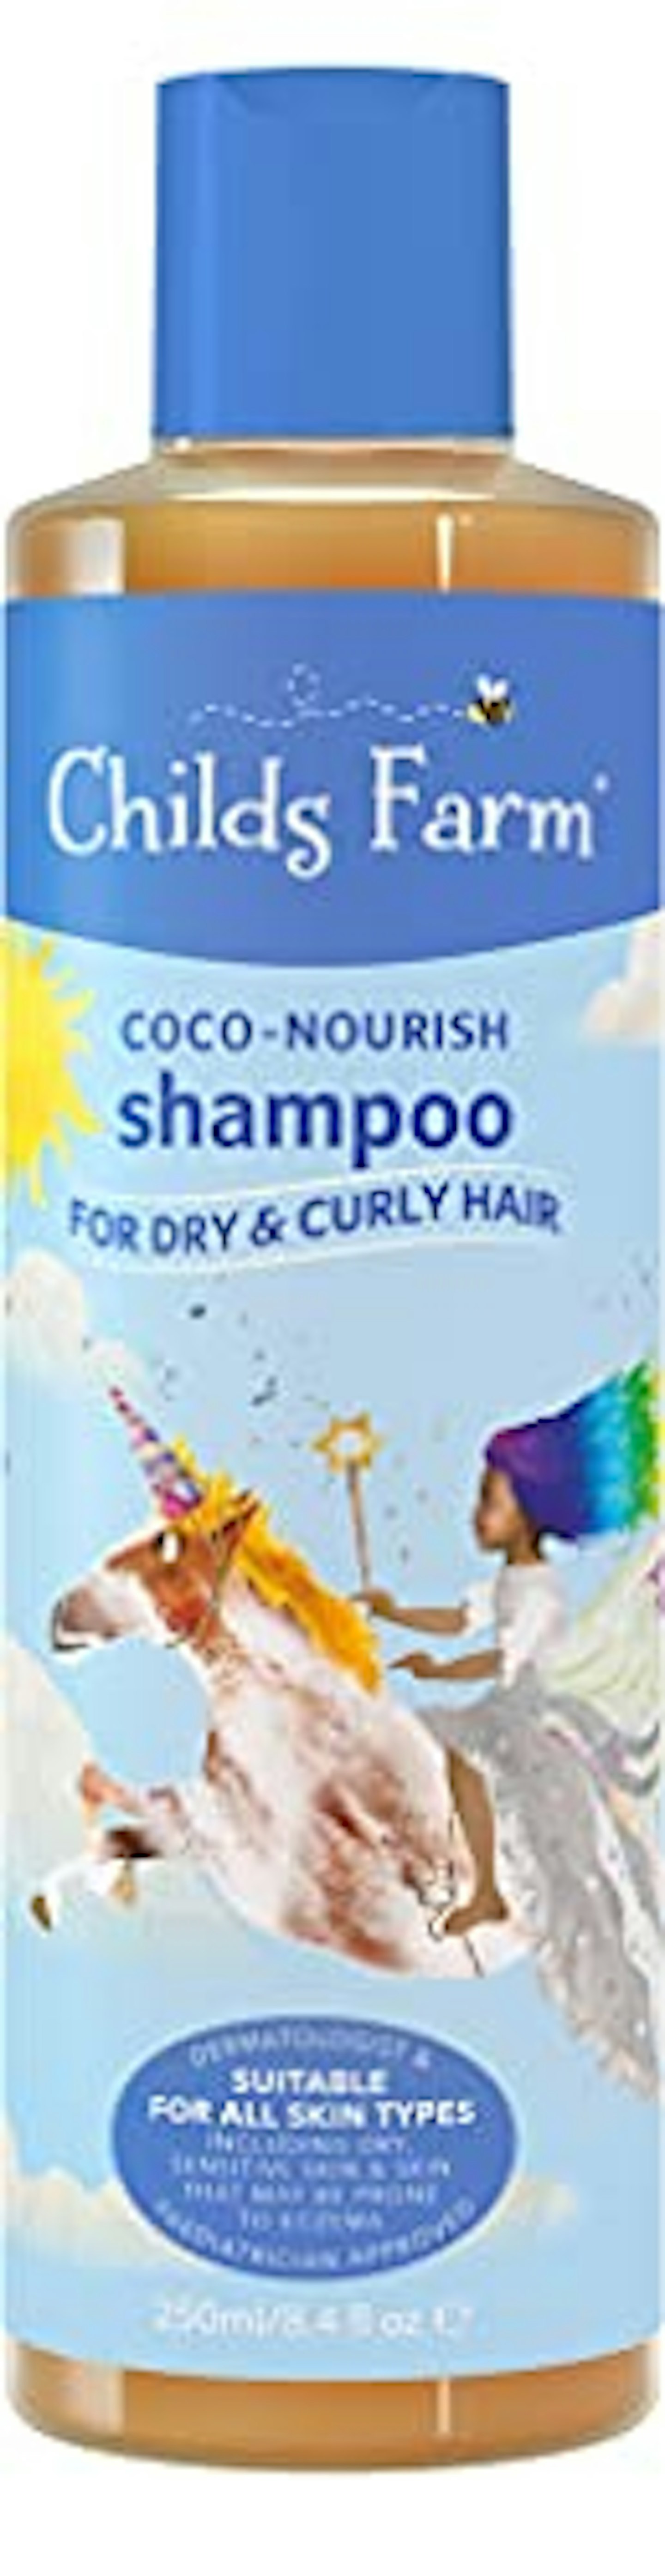 Childs Farm Coco-Nourish Shampoo